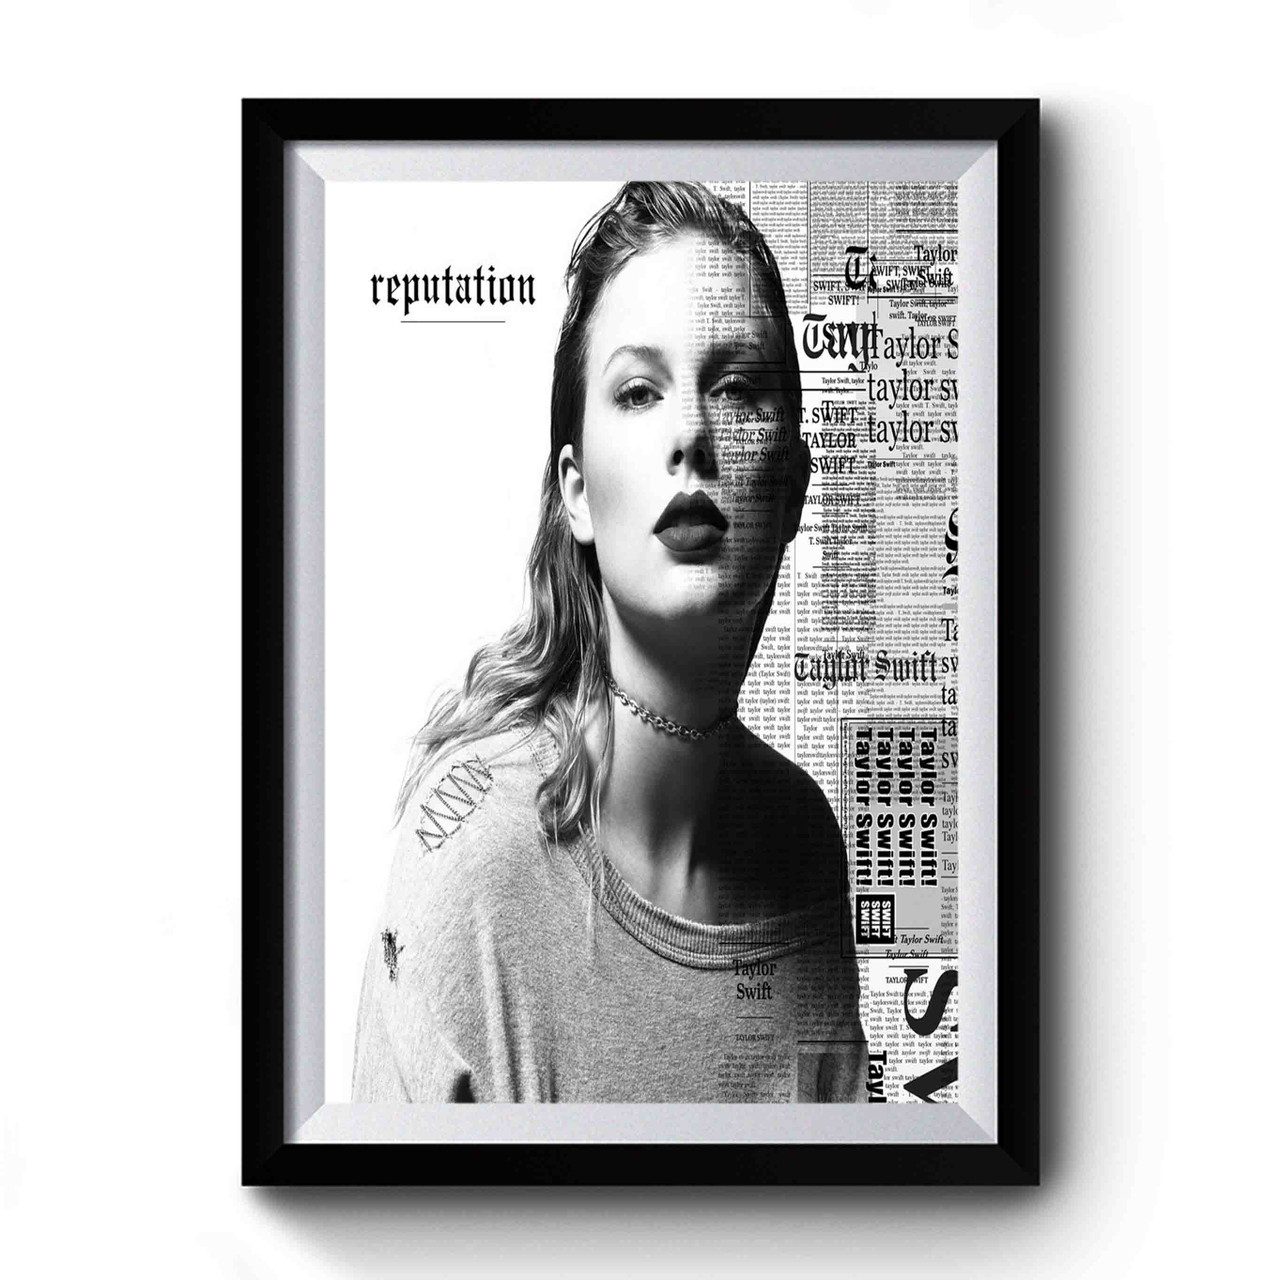 End game - Taylor Swift #edsheeran #future #feat #reputationtaylorsver